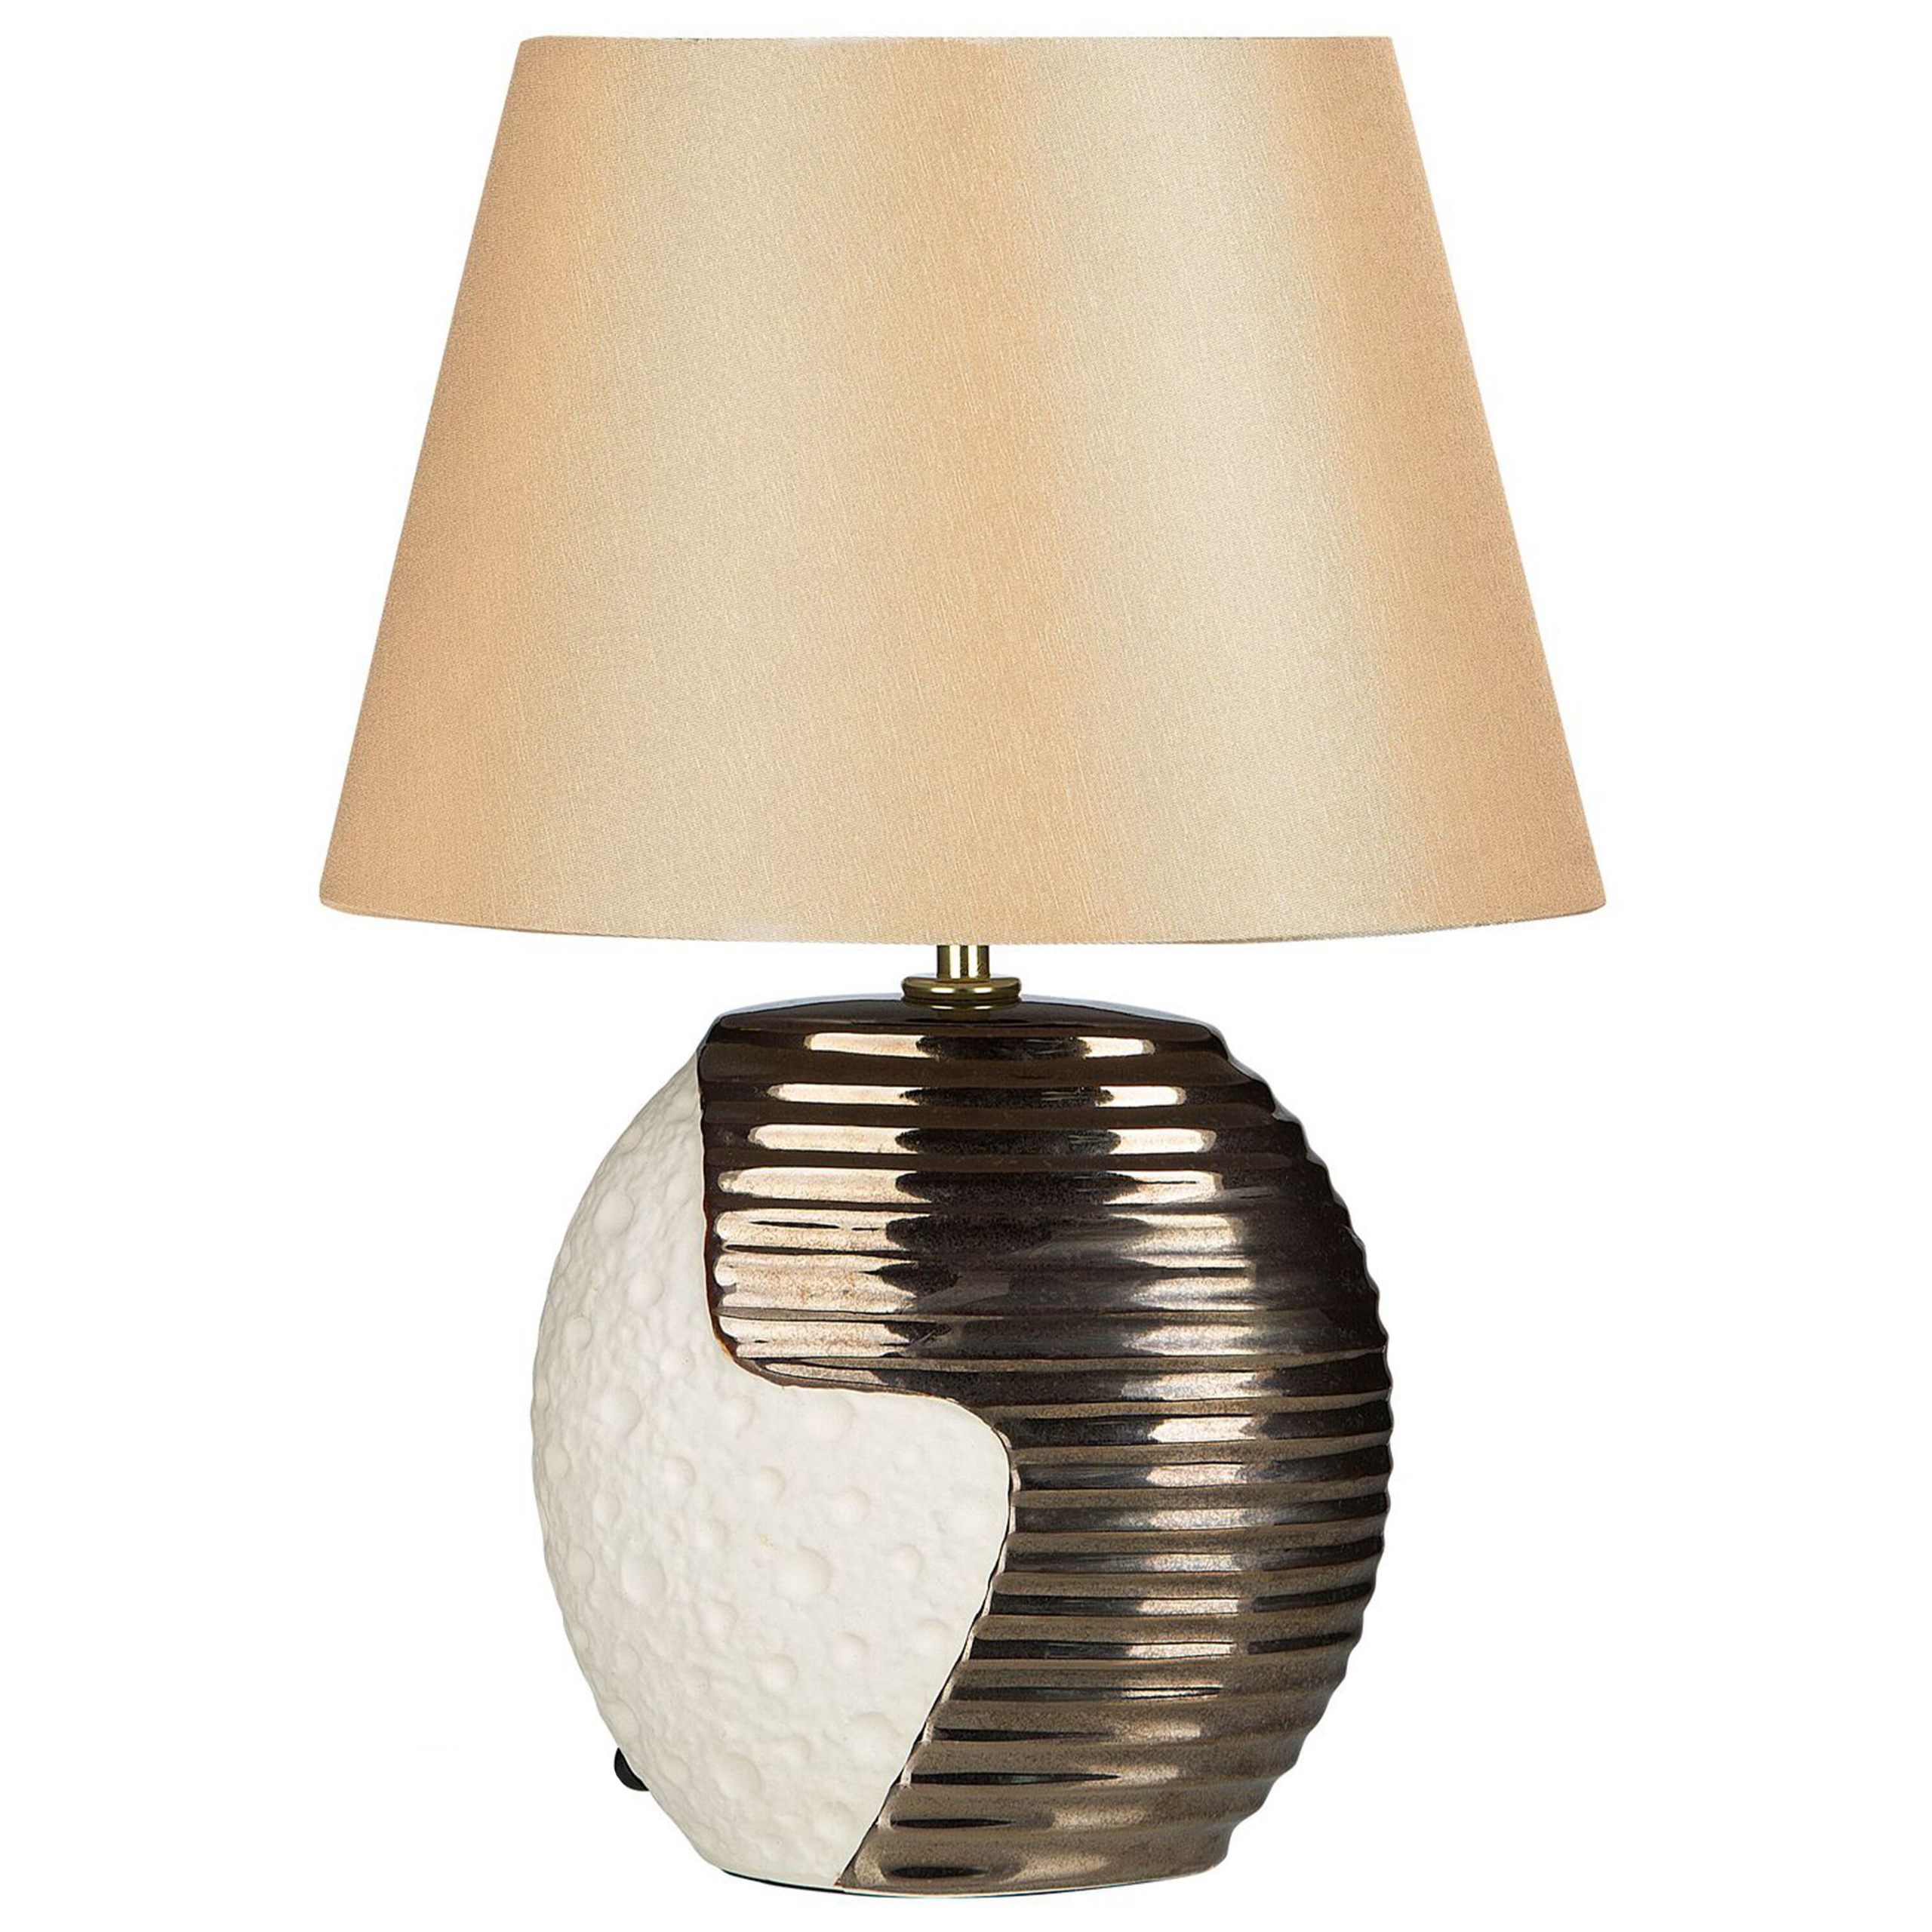 Beliani Table Lamp Gold Ceramic Base Fabric Drum Shade Bedside Table Lamp